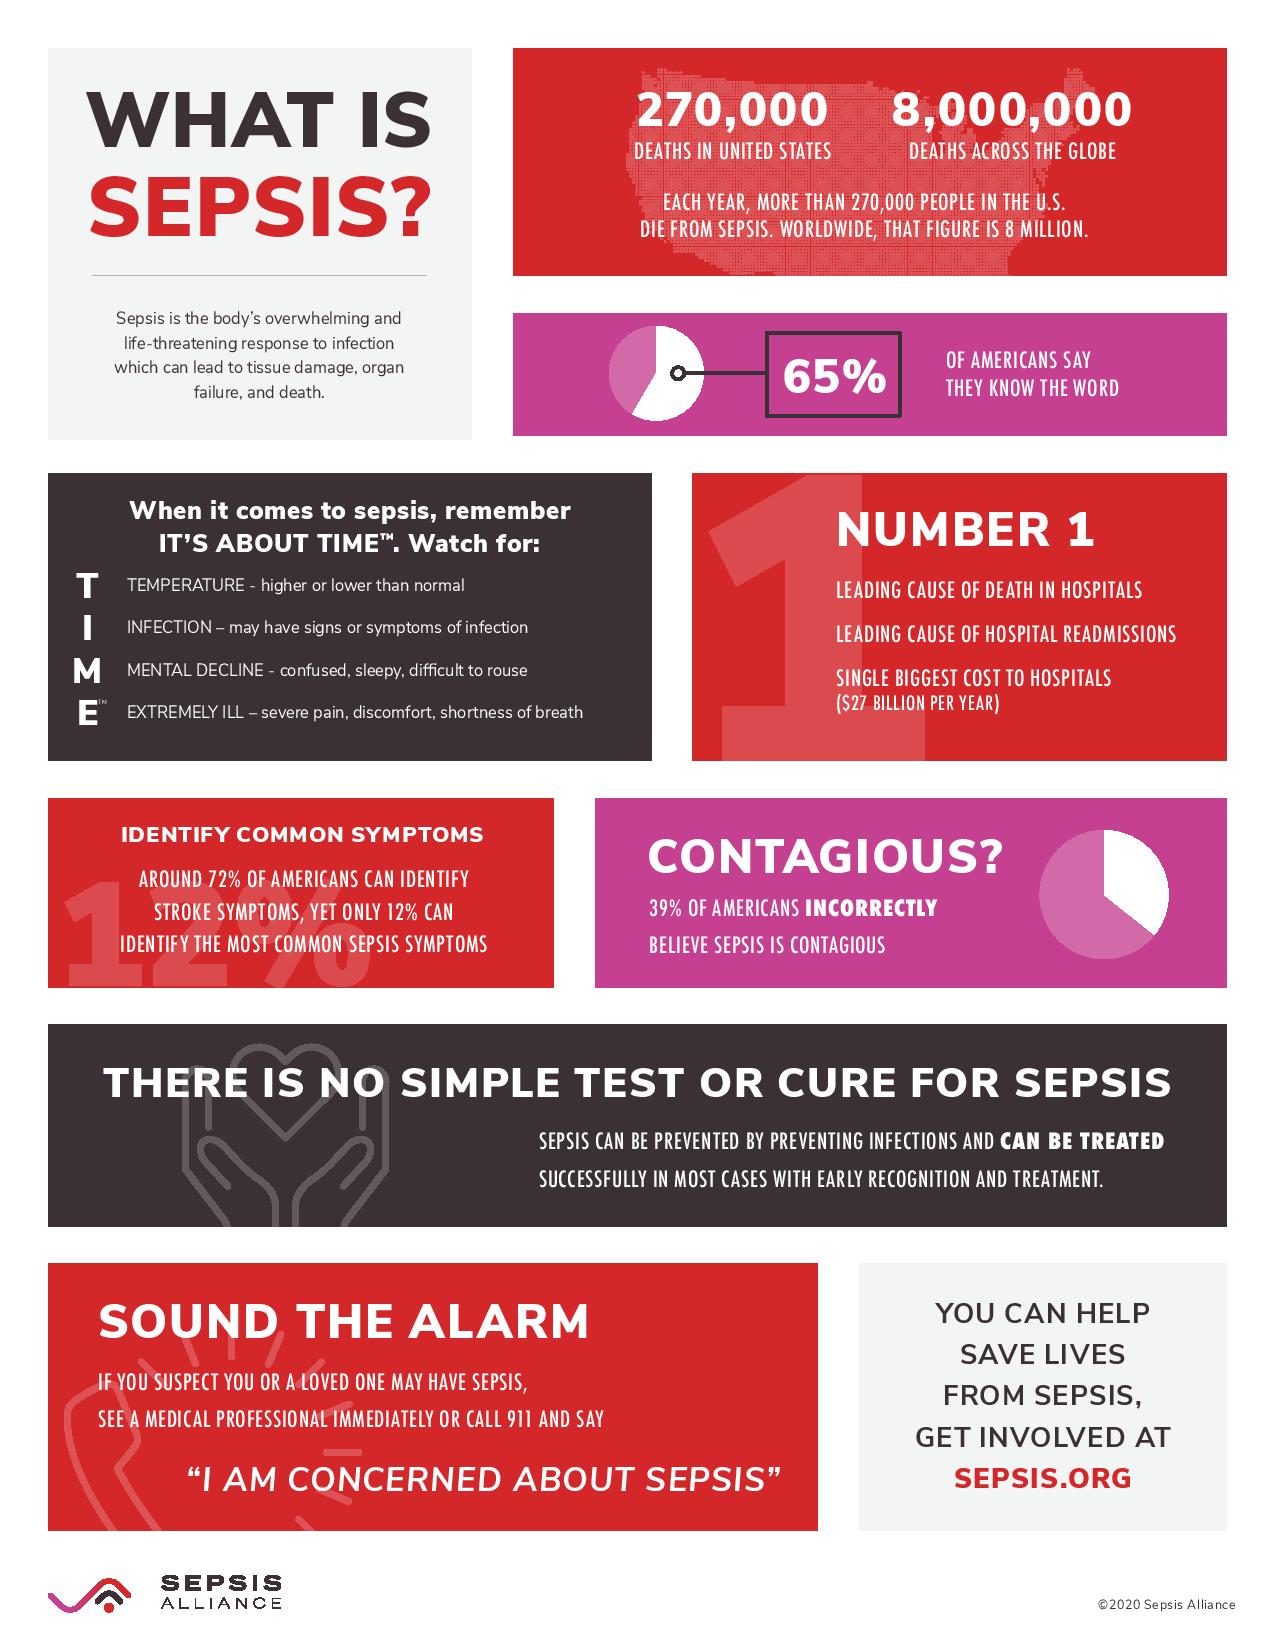 Recognizing Symptoms Is Key For Sepsis Survival | Owensboro Health